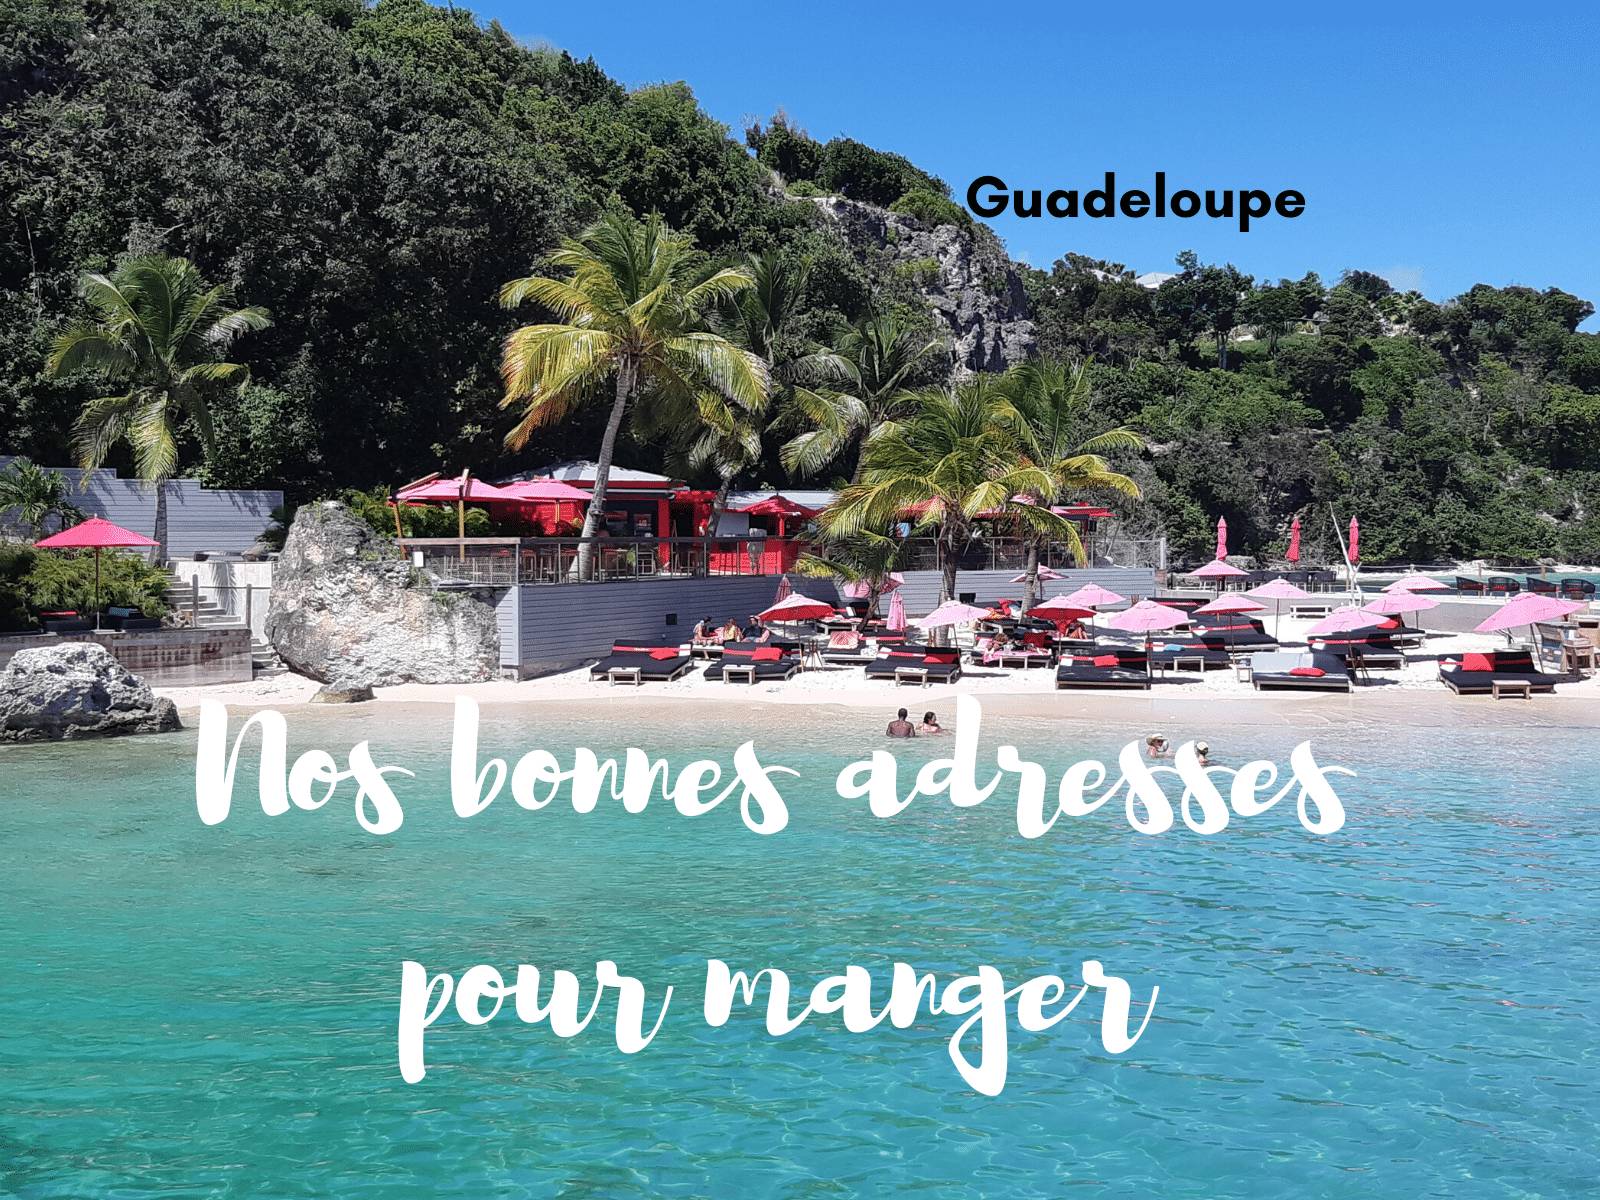 Visiter la Désirade  Guadeloupe - Famille en voyage